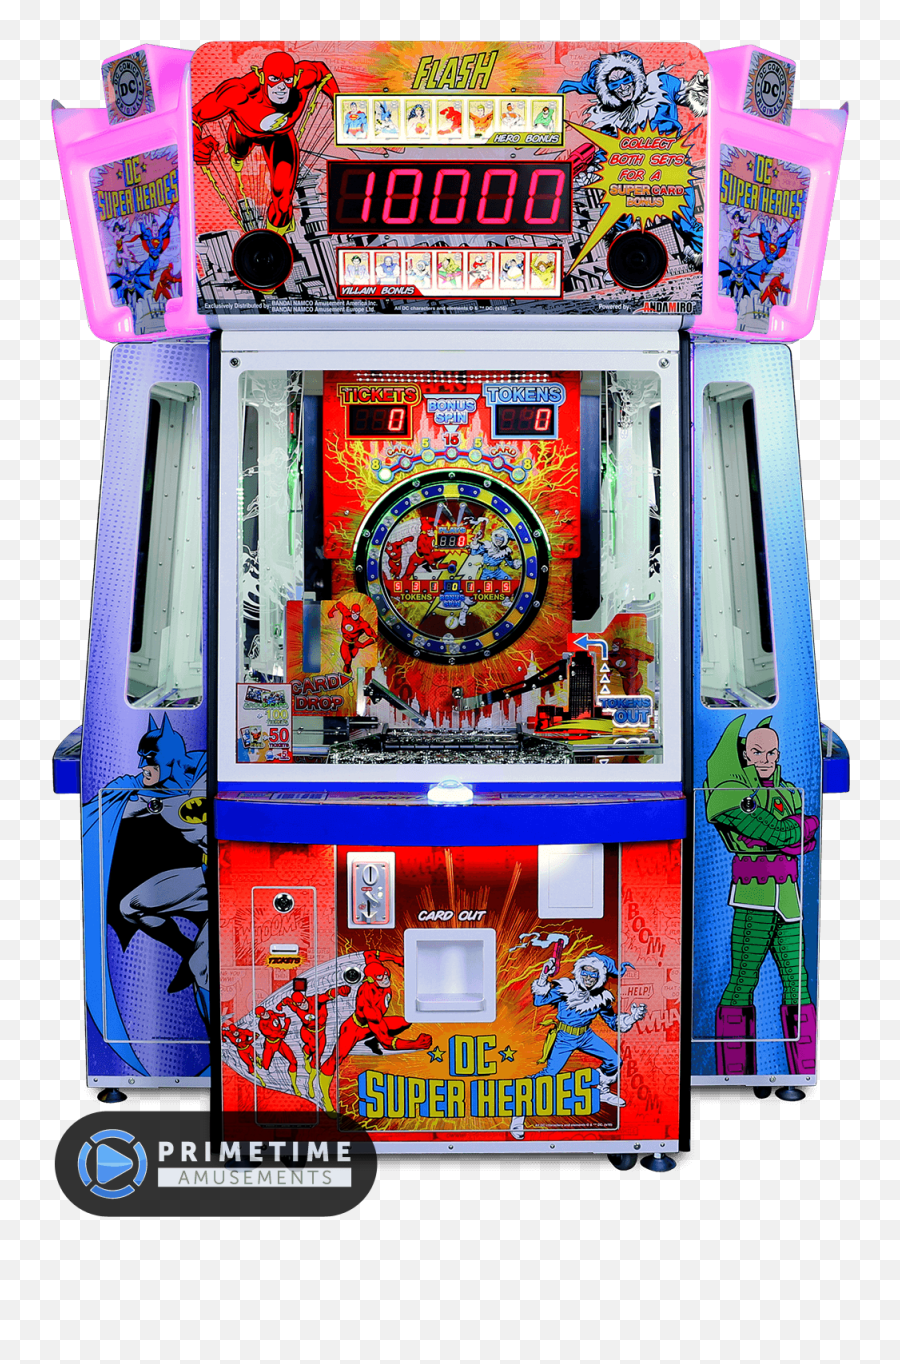 Bandai Namco Amusements Arcade Machines For Sale U0026 For Rent Emoji,Bandai Namco Logo